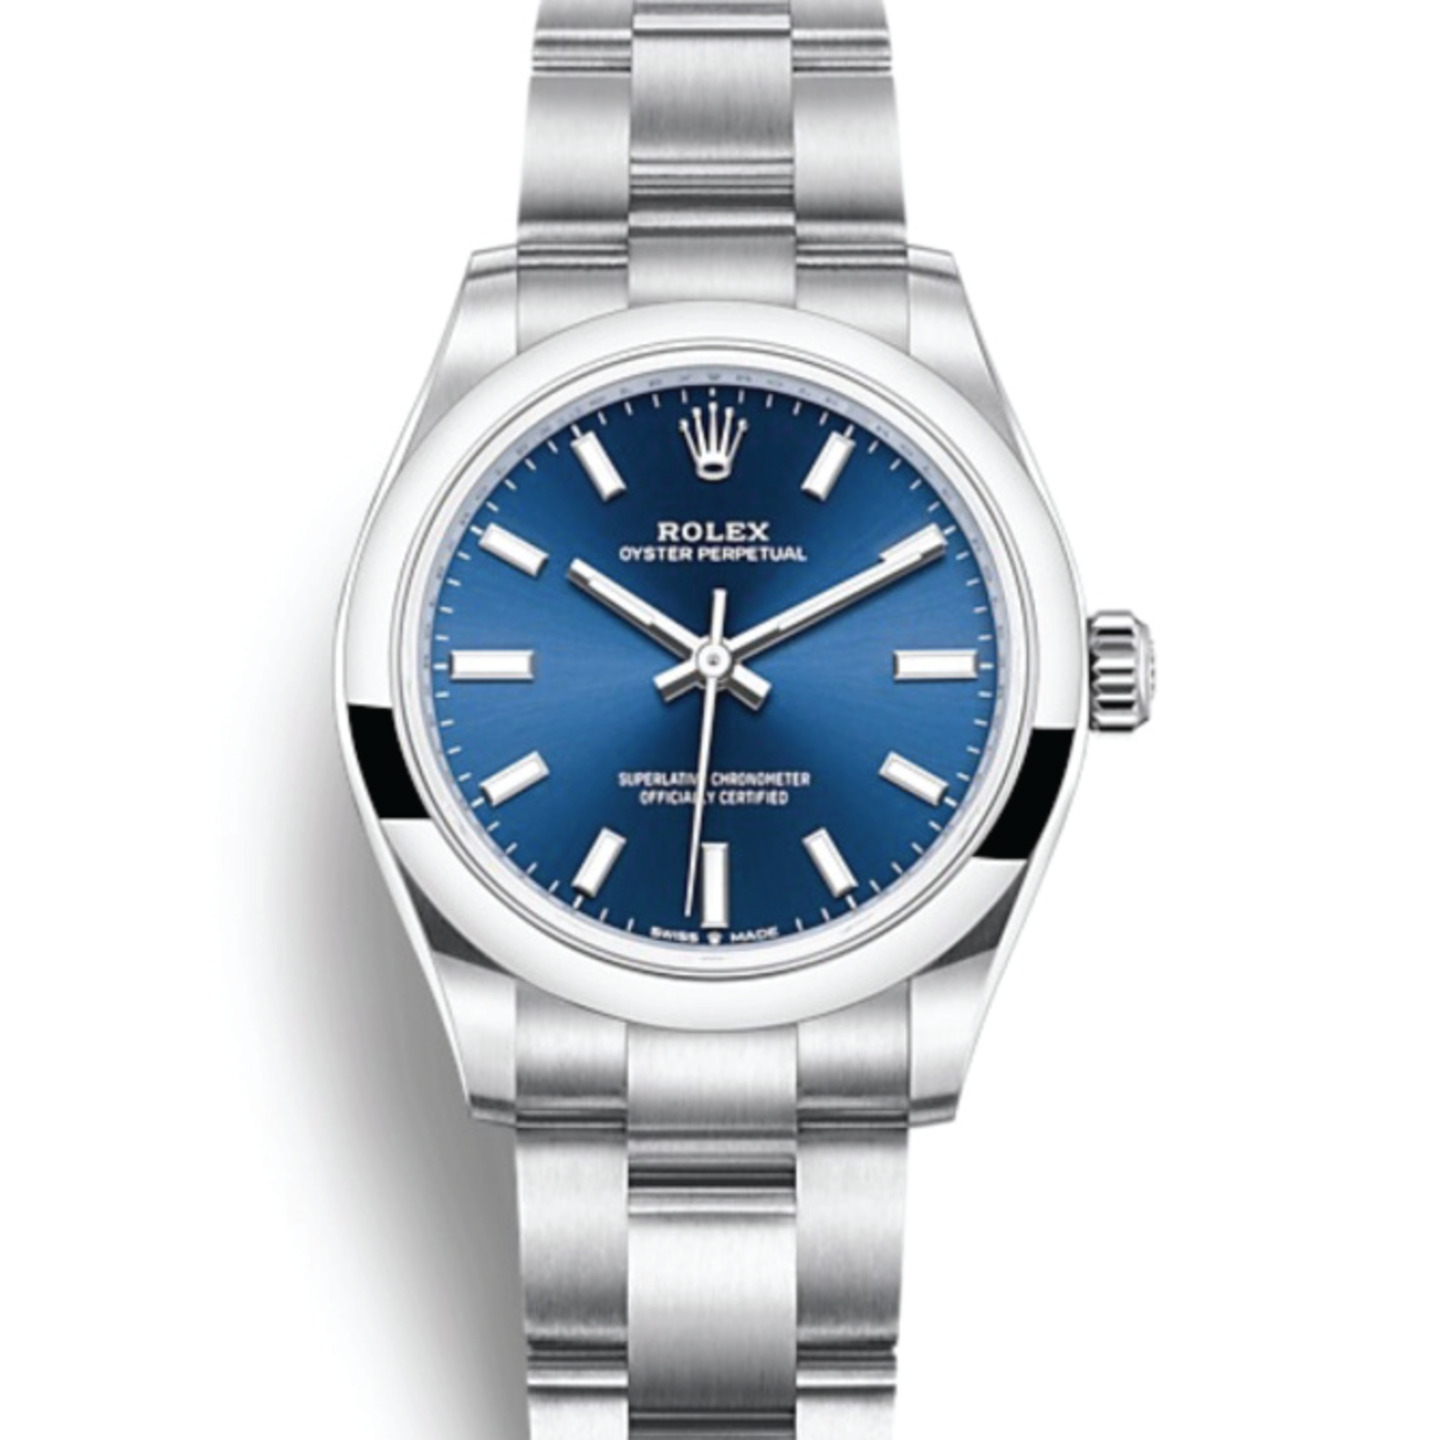 Rolex Oyster Perpetual 31mm 藍色錶面蠔式錶帶腕錶